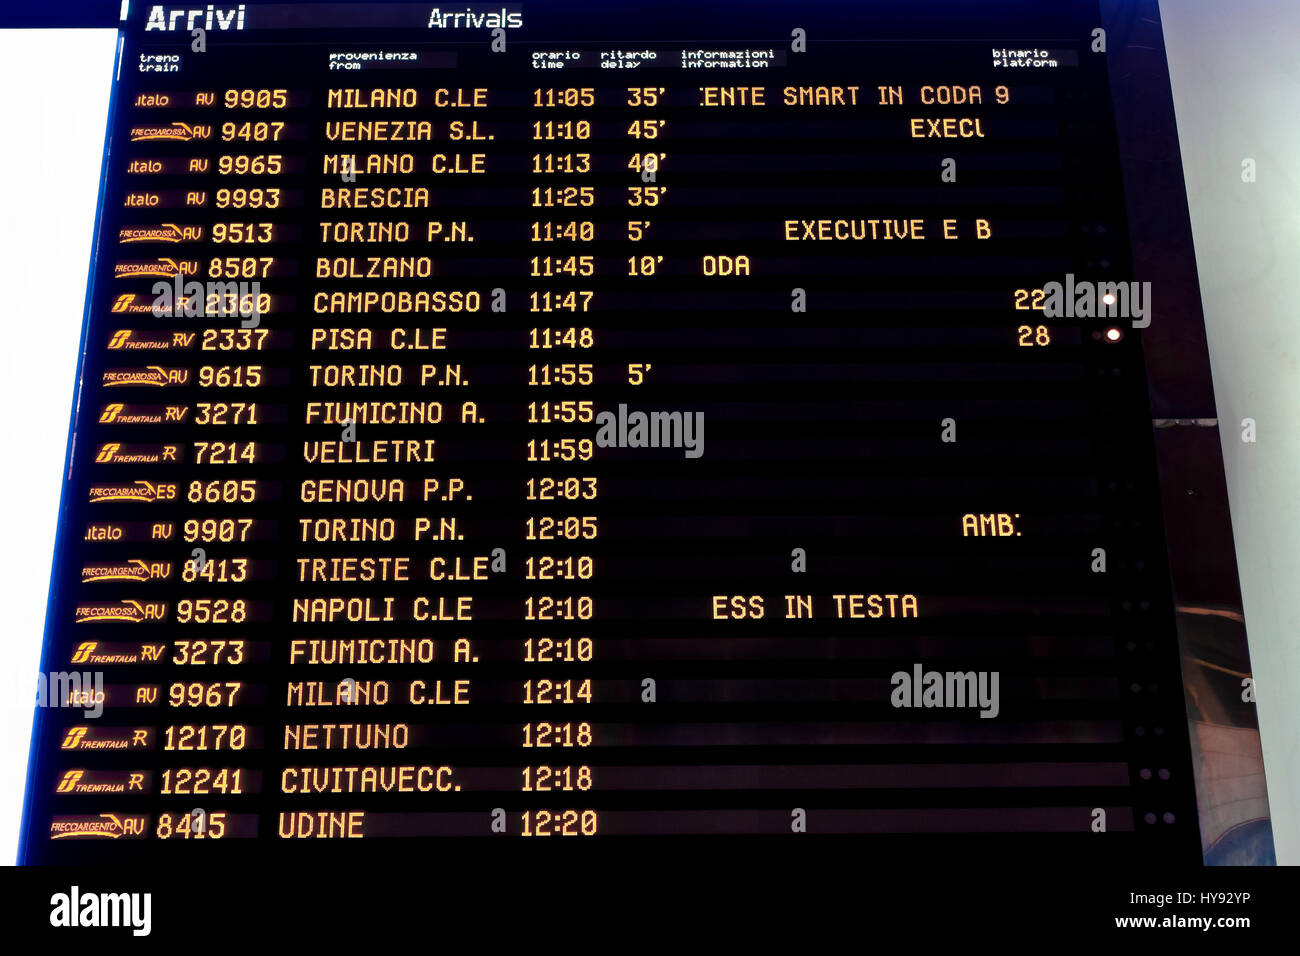 Arrivals schedule information display board panel at Termini Railway Station. Rome, Italy, Europe, European Union, EU. Stock Photo